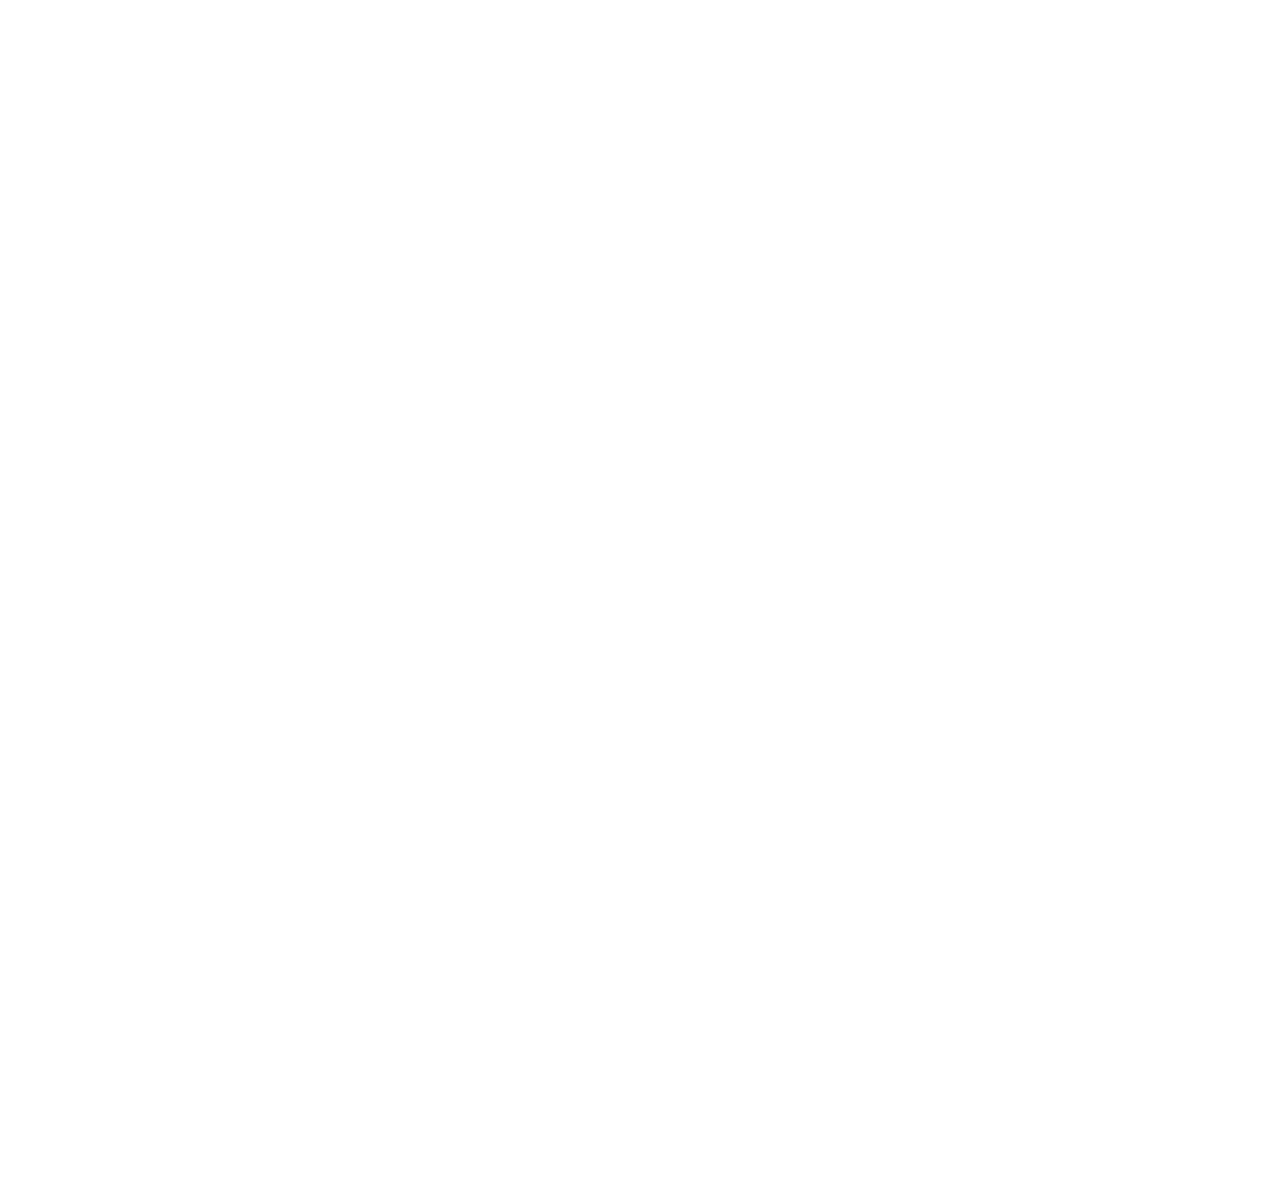 DAYDIXON 's logo